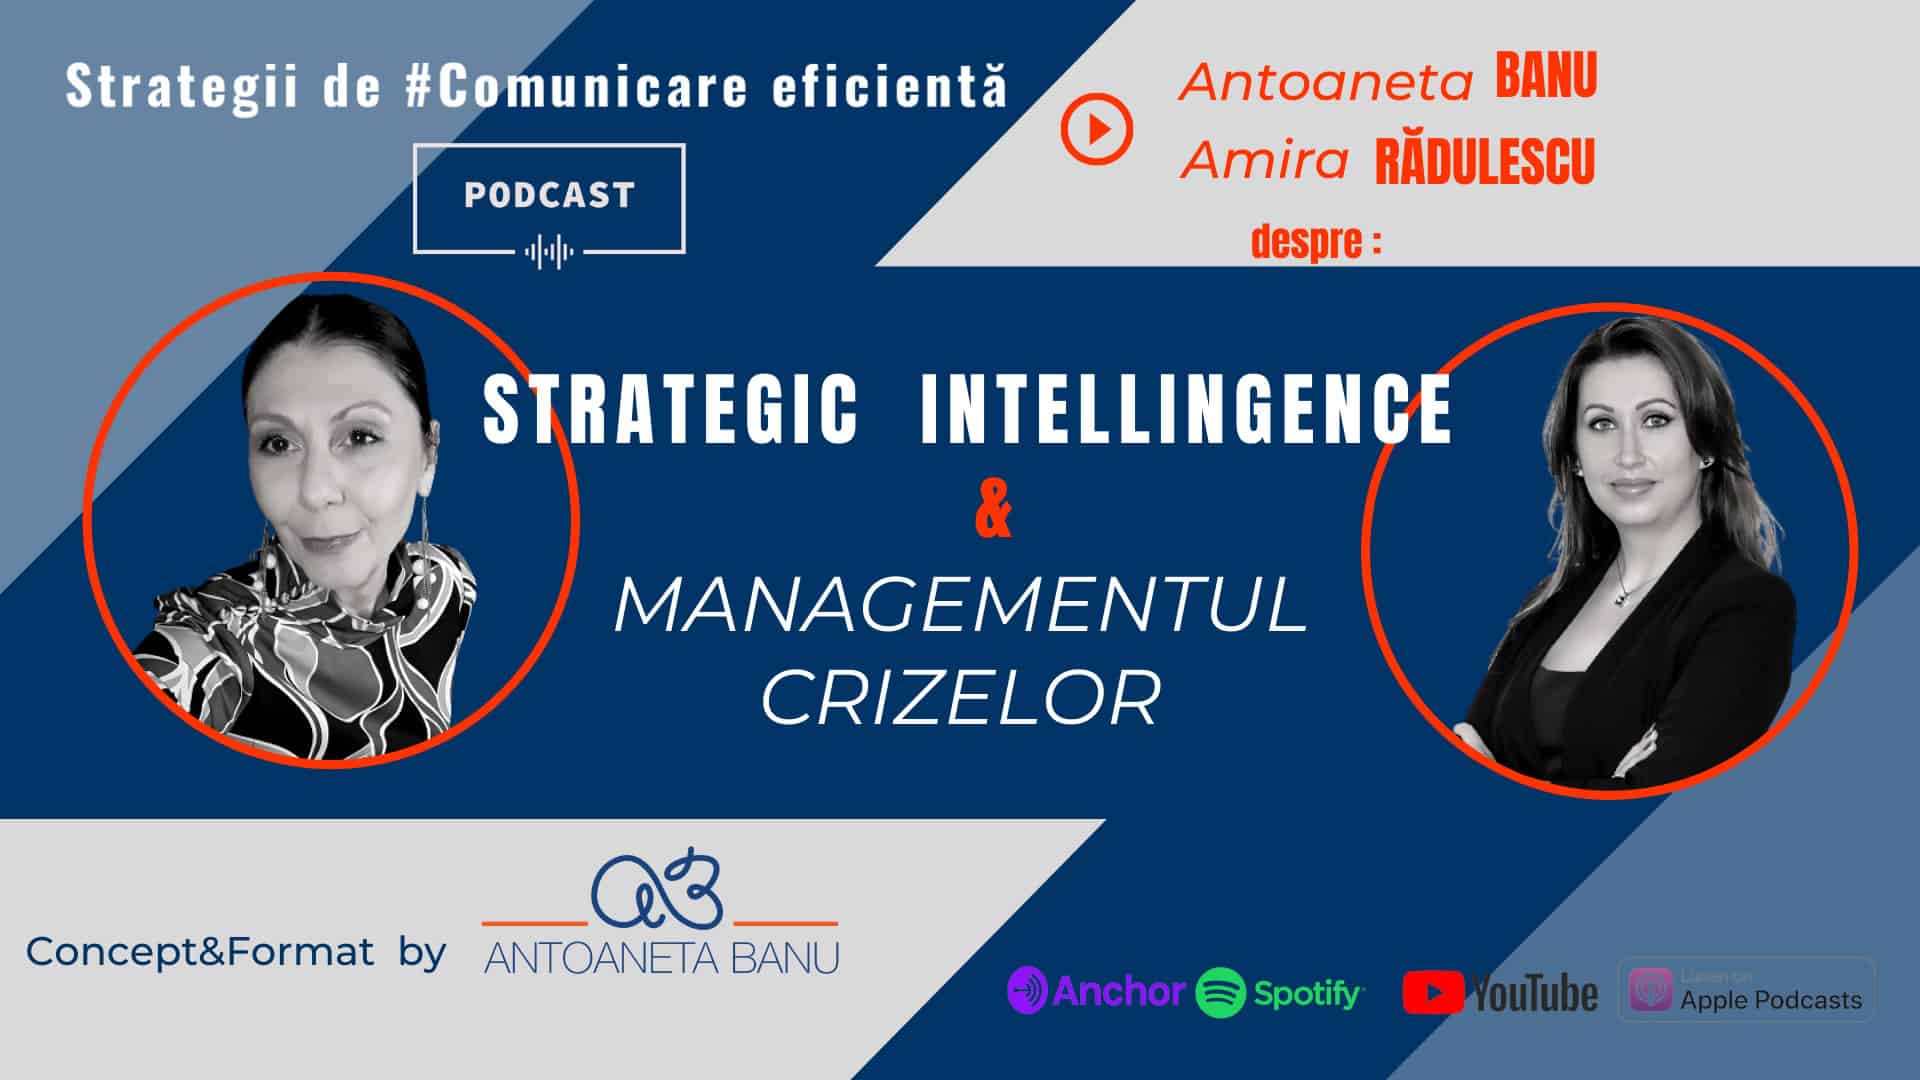 #StrategicIntelligence #ManagementulCrizelor